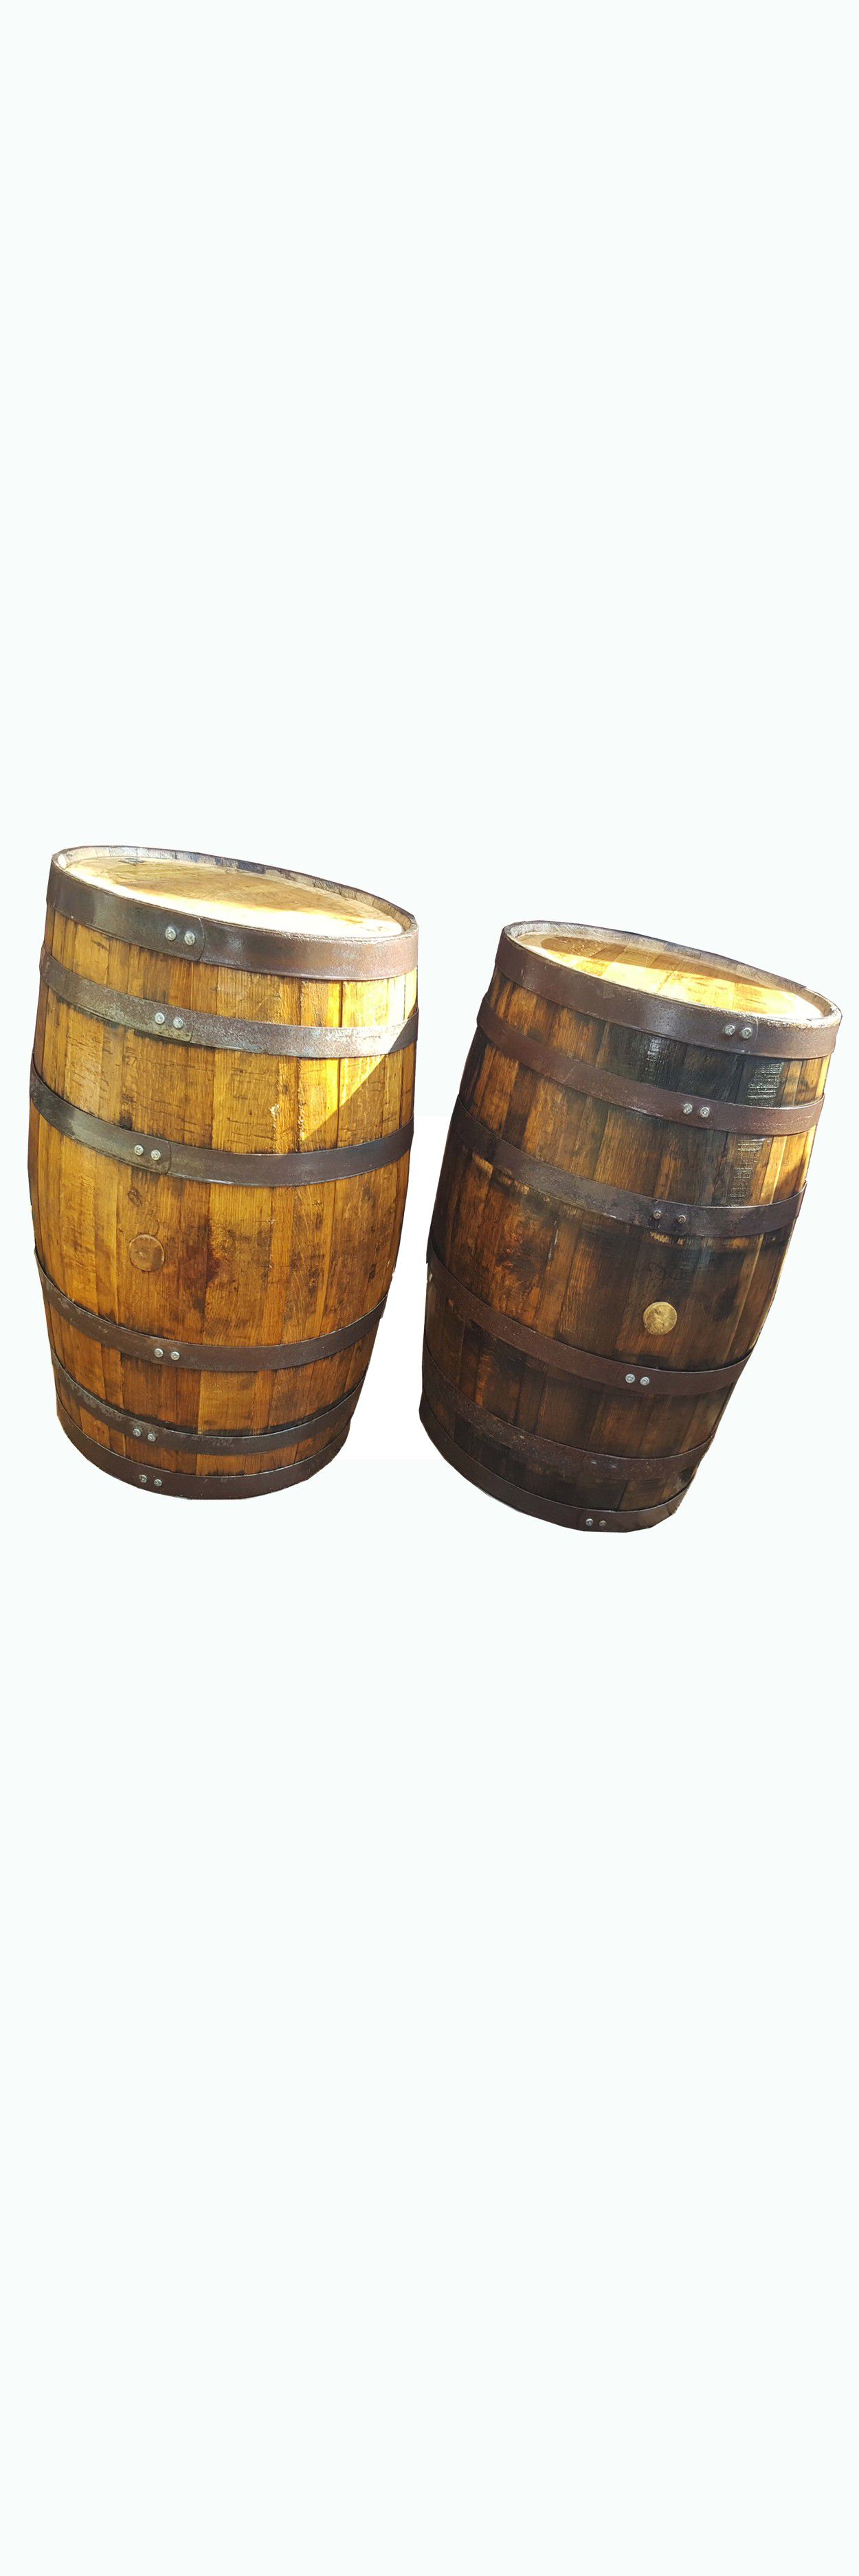 Barrel Vintage Wood whiskey wine 4r dec○ restaurant sports bar smoke shop tiki bar patio furniture